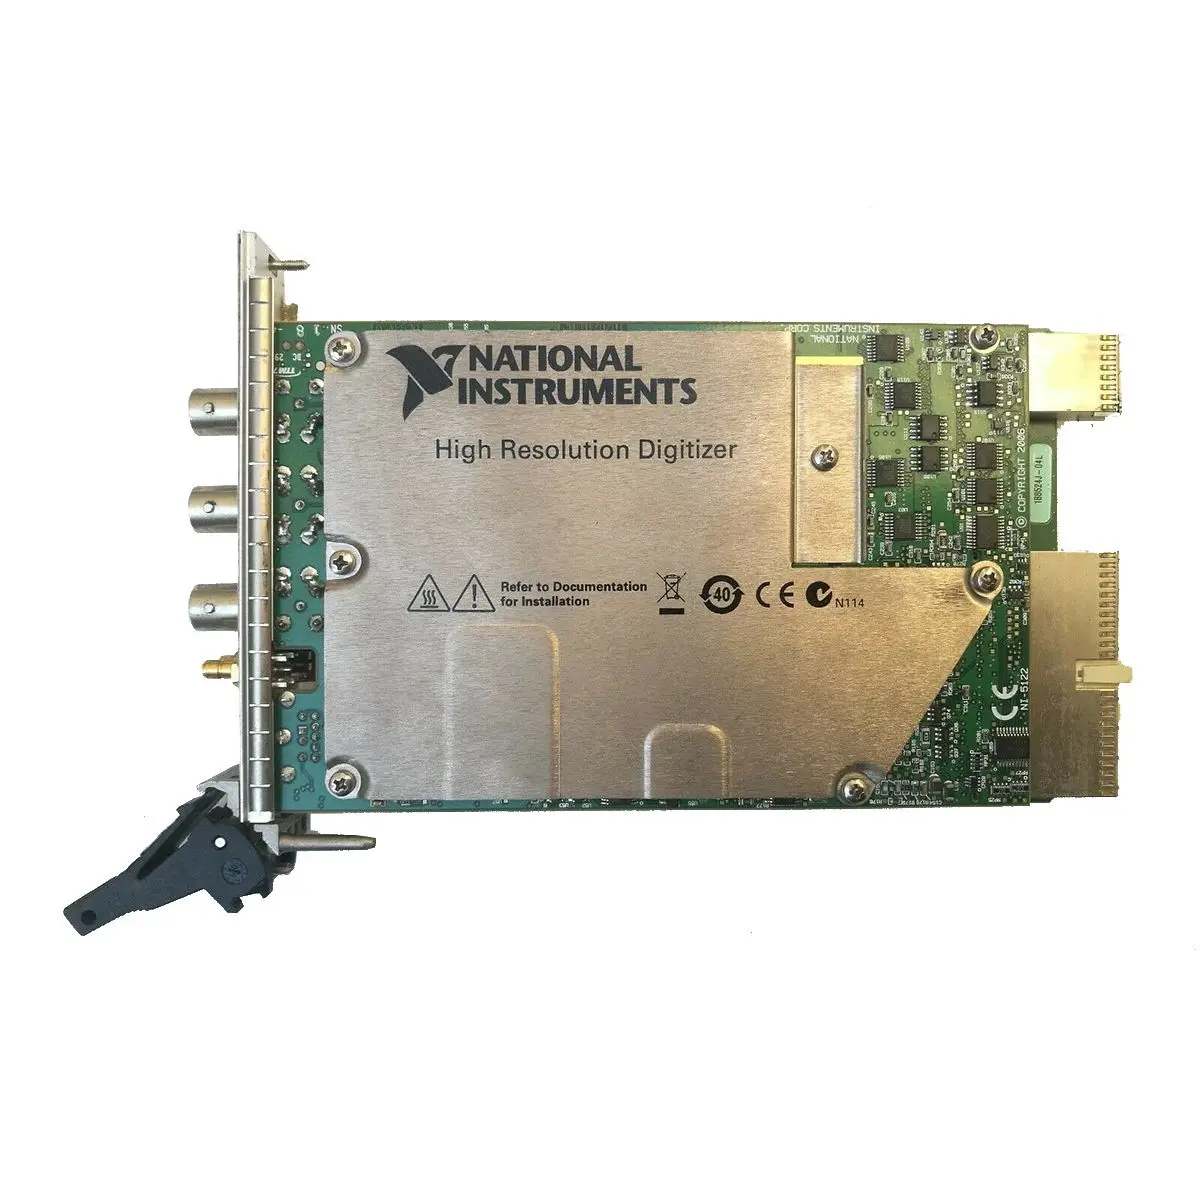 

National Instruments NI PXI-5122 778756-04 512MB дигитайзер DAQ карта/модуль б/у